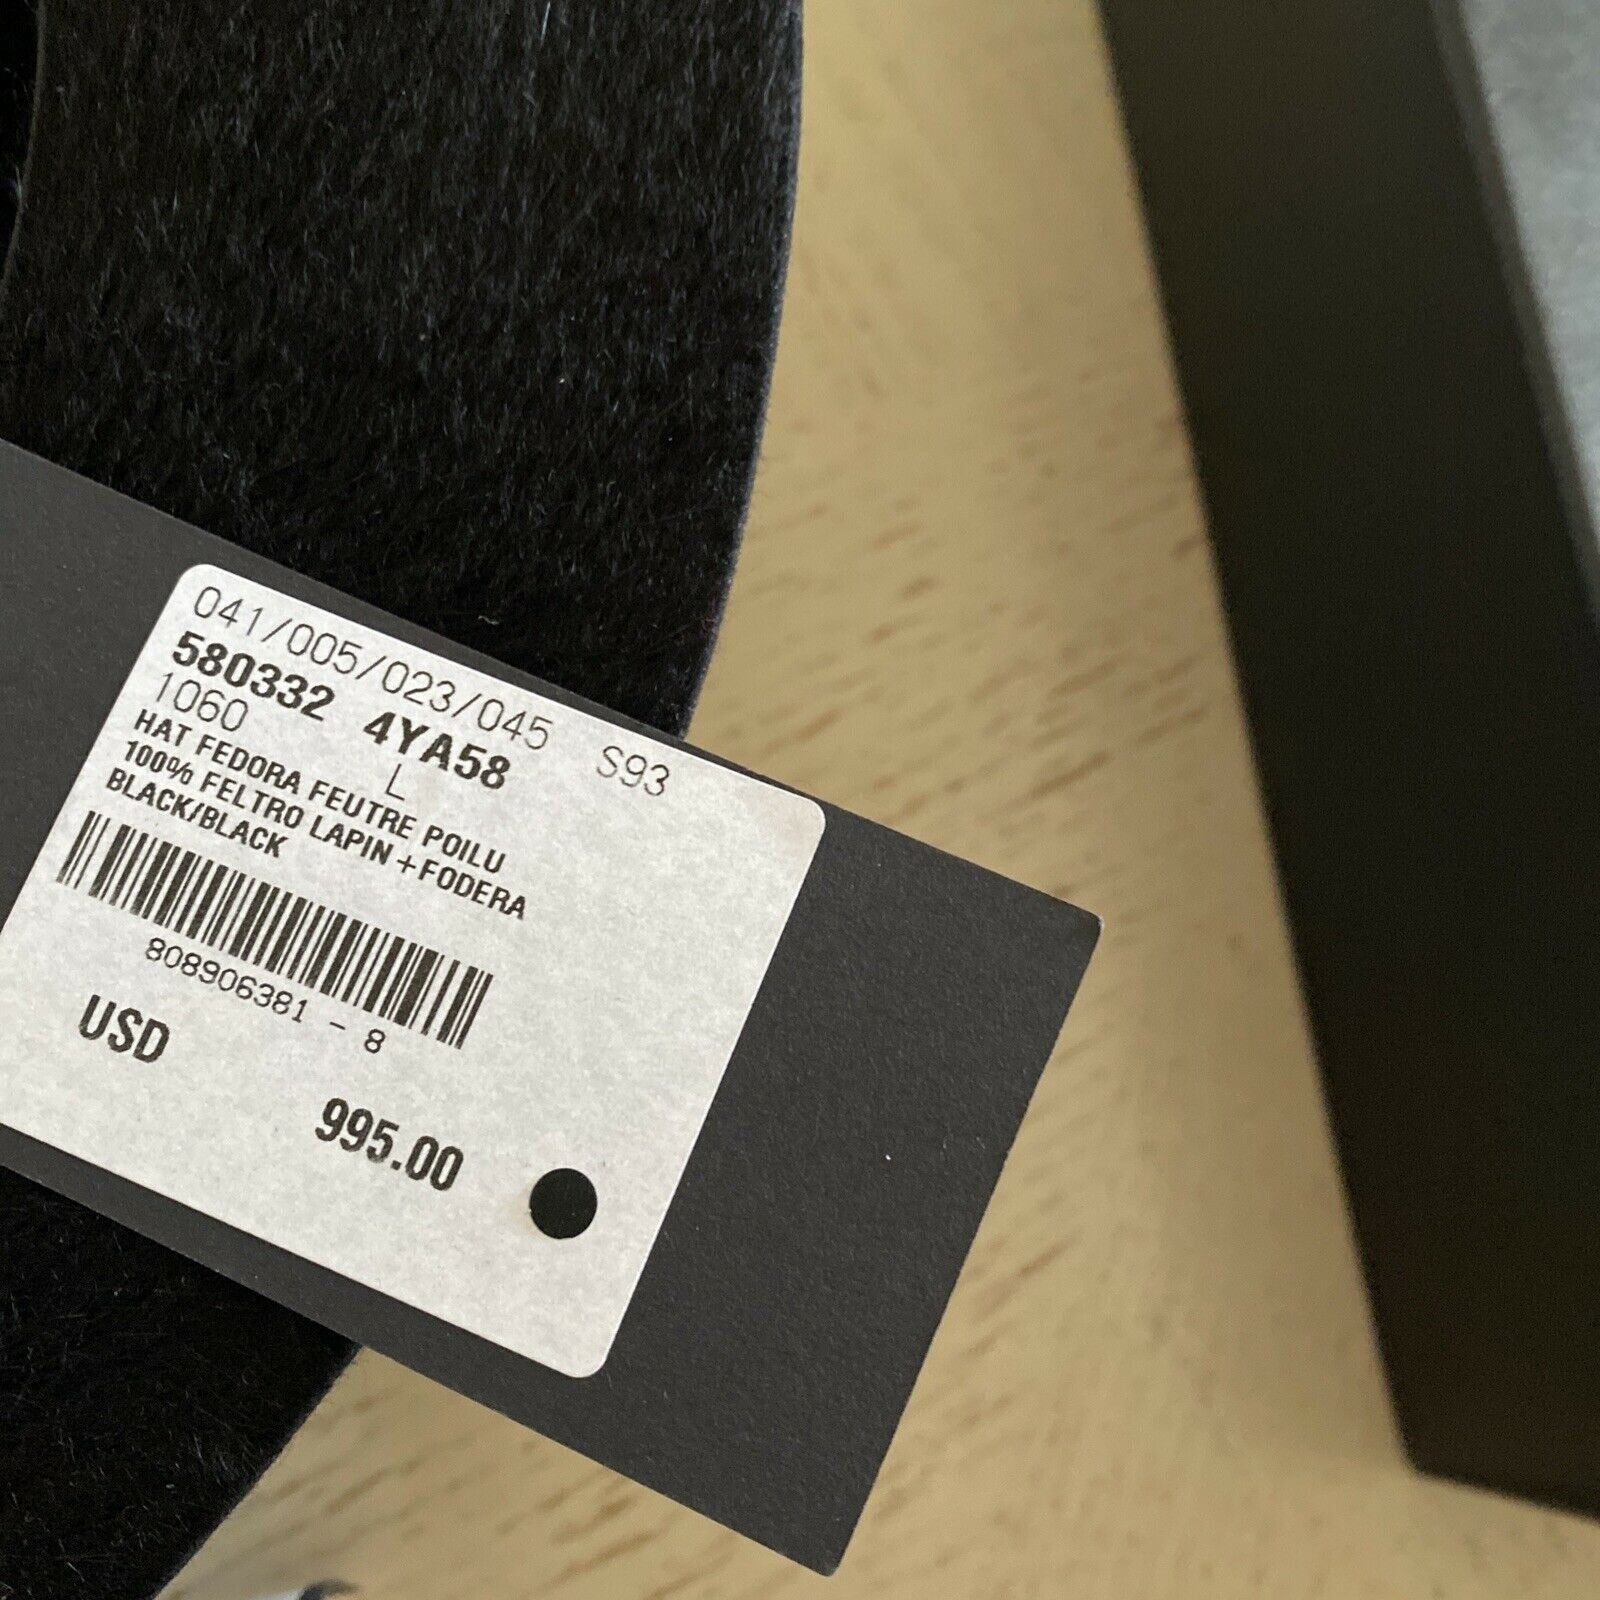 NWT $995 Saint Laurent Men Shaggy Felt Fedora Hat Black Size L Italy